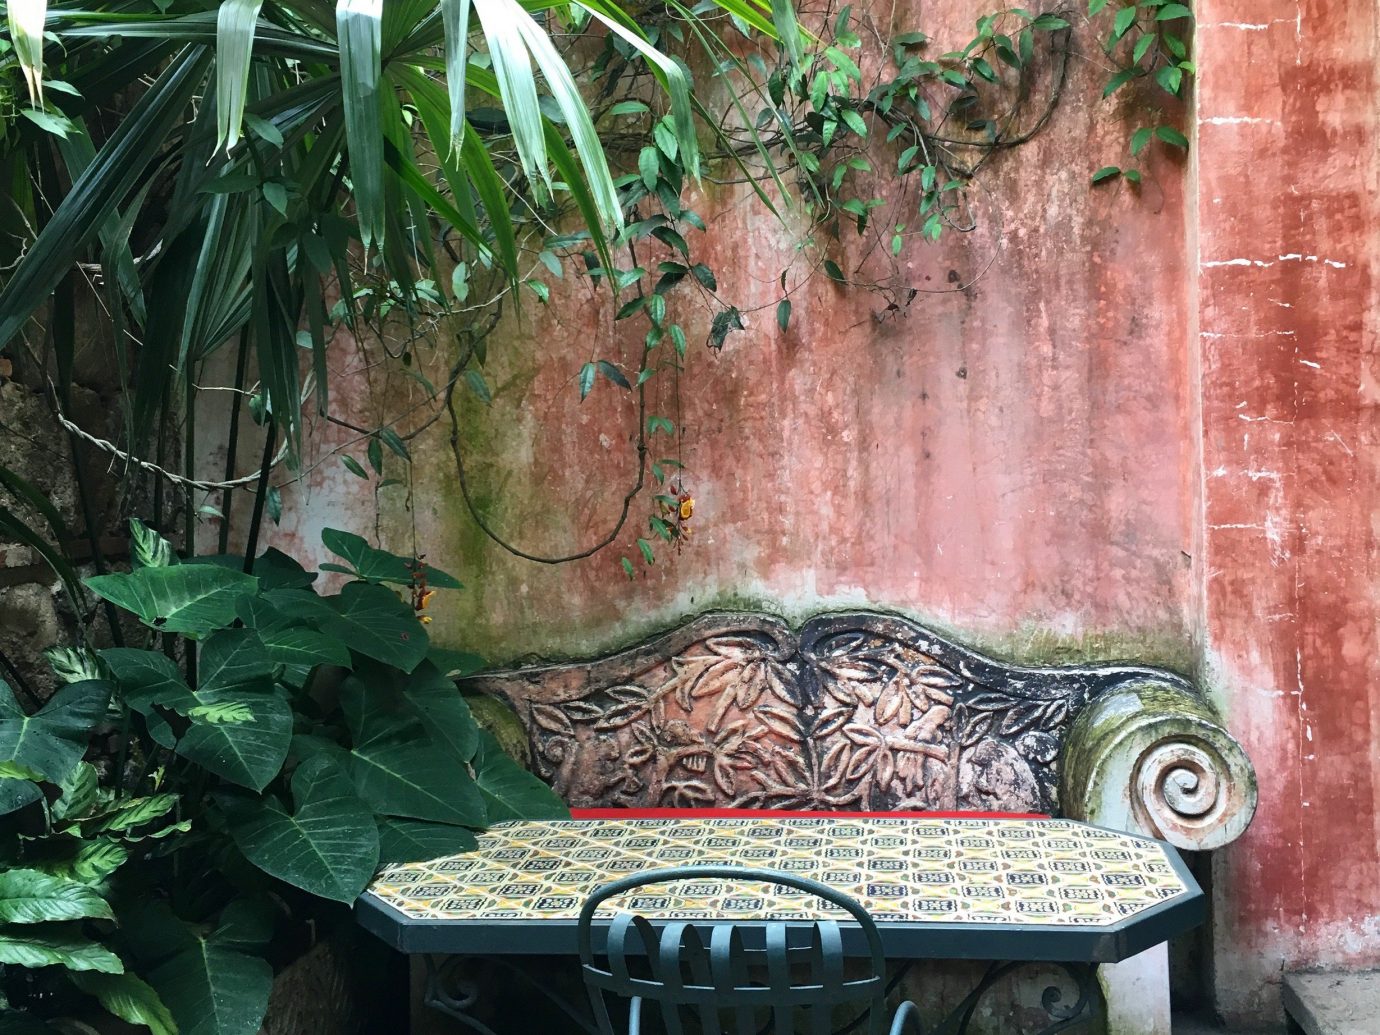 Hotels Luxury Travel Trip Ideas Garden water feature yard backyard flower fountain stone plant